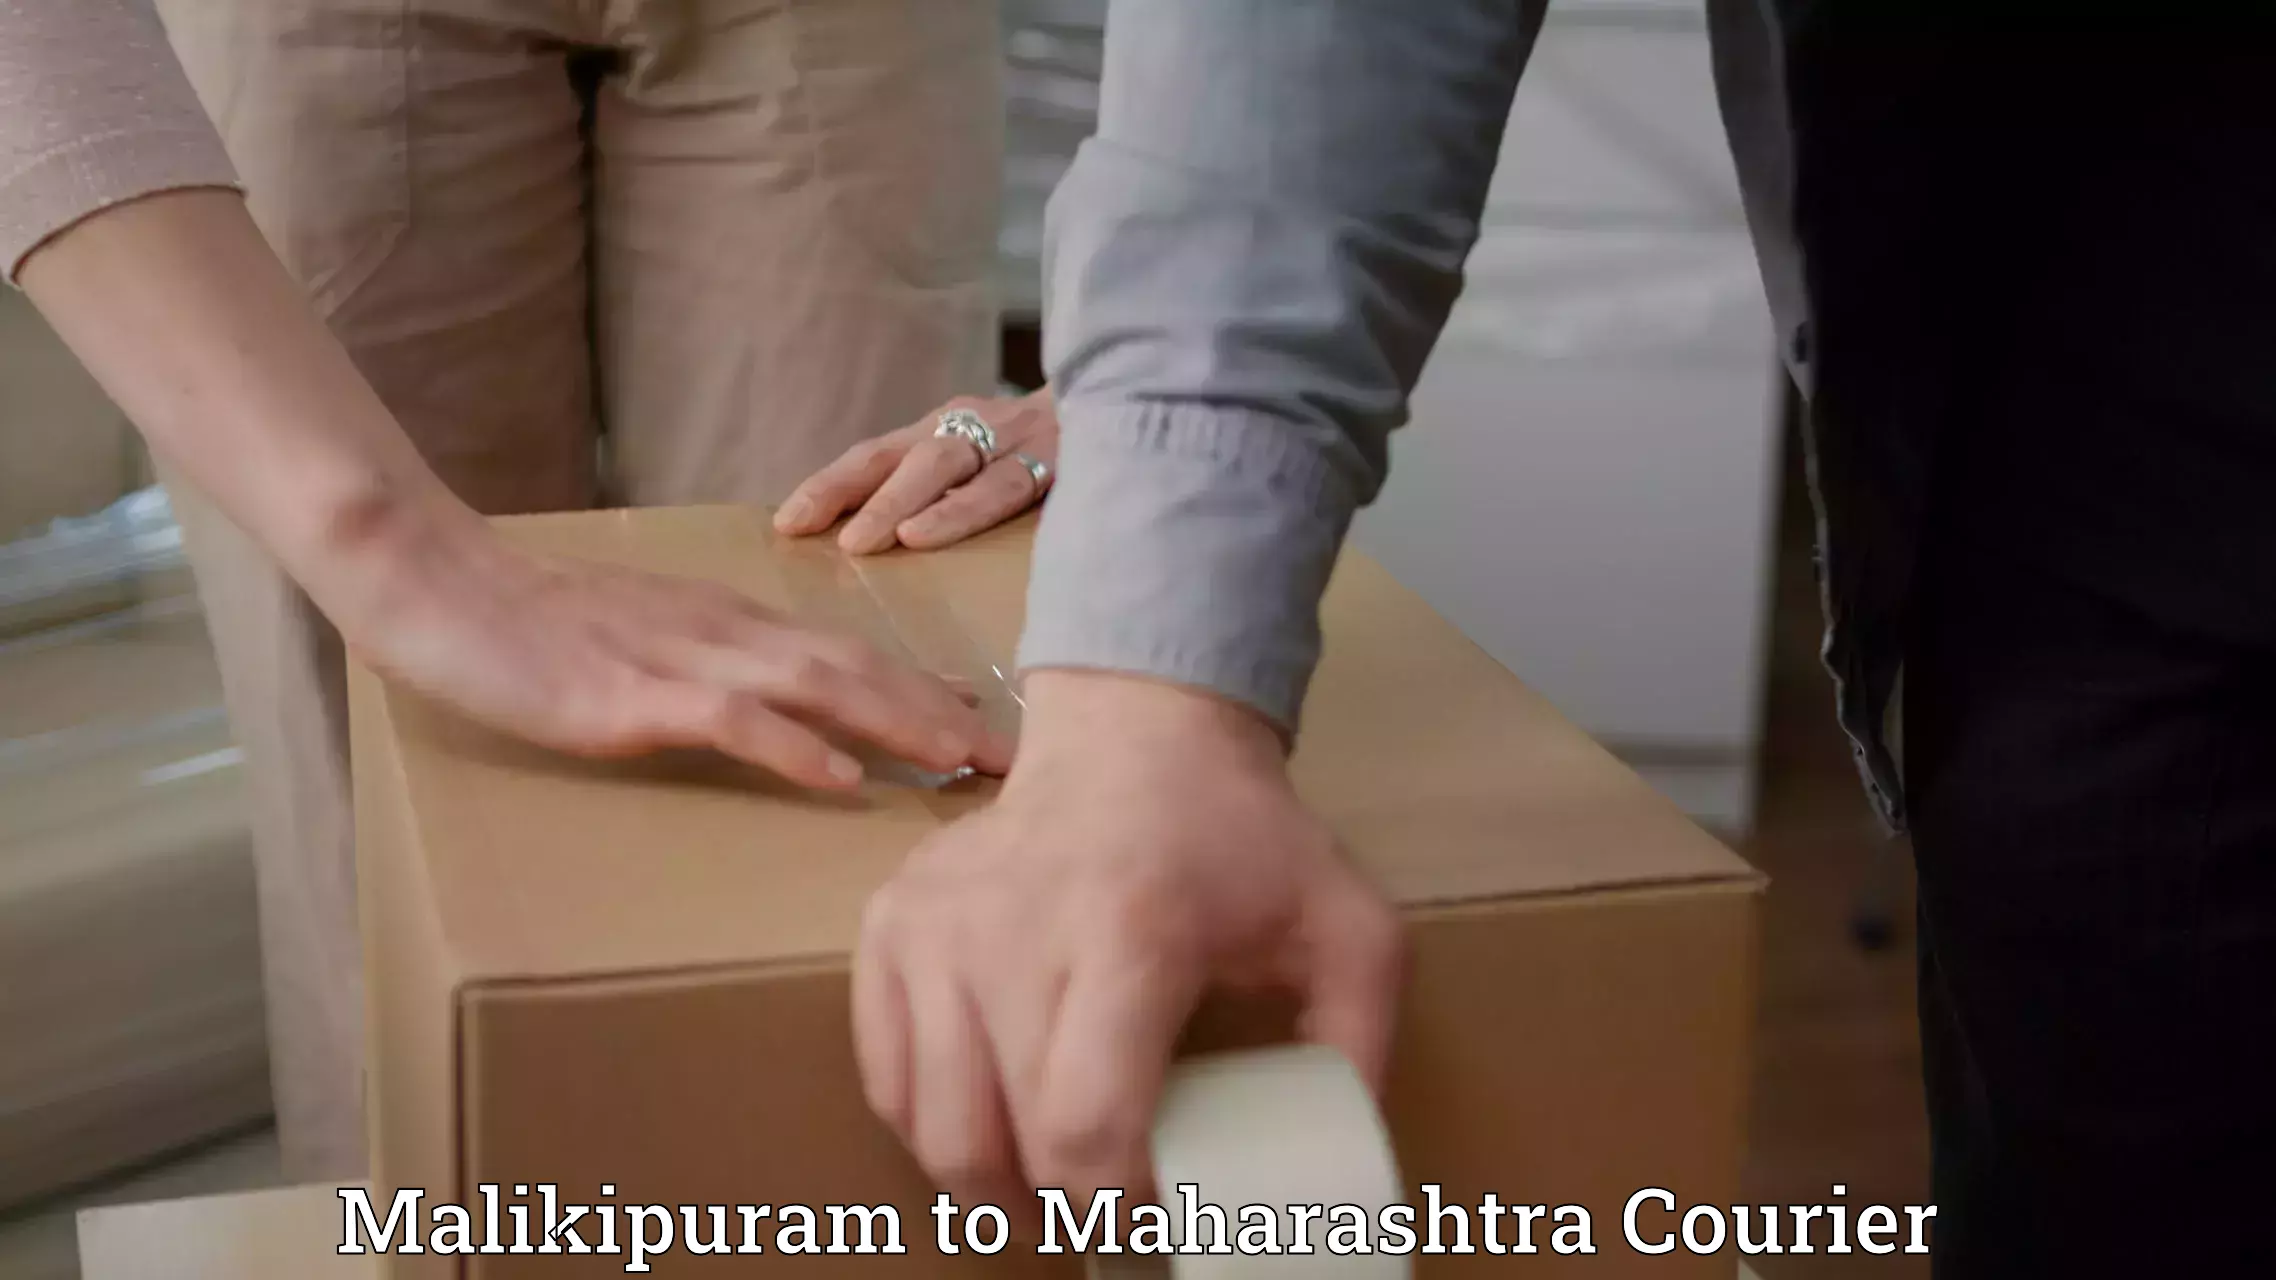 Quick dispatch service Malikipuram to Pen Raigad